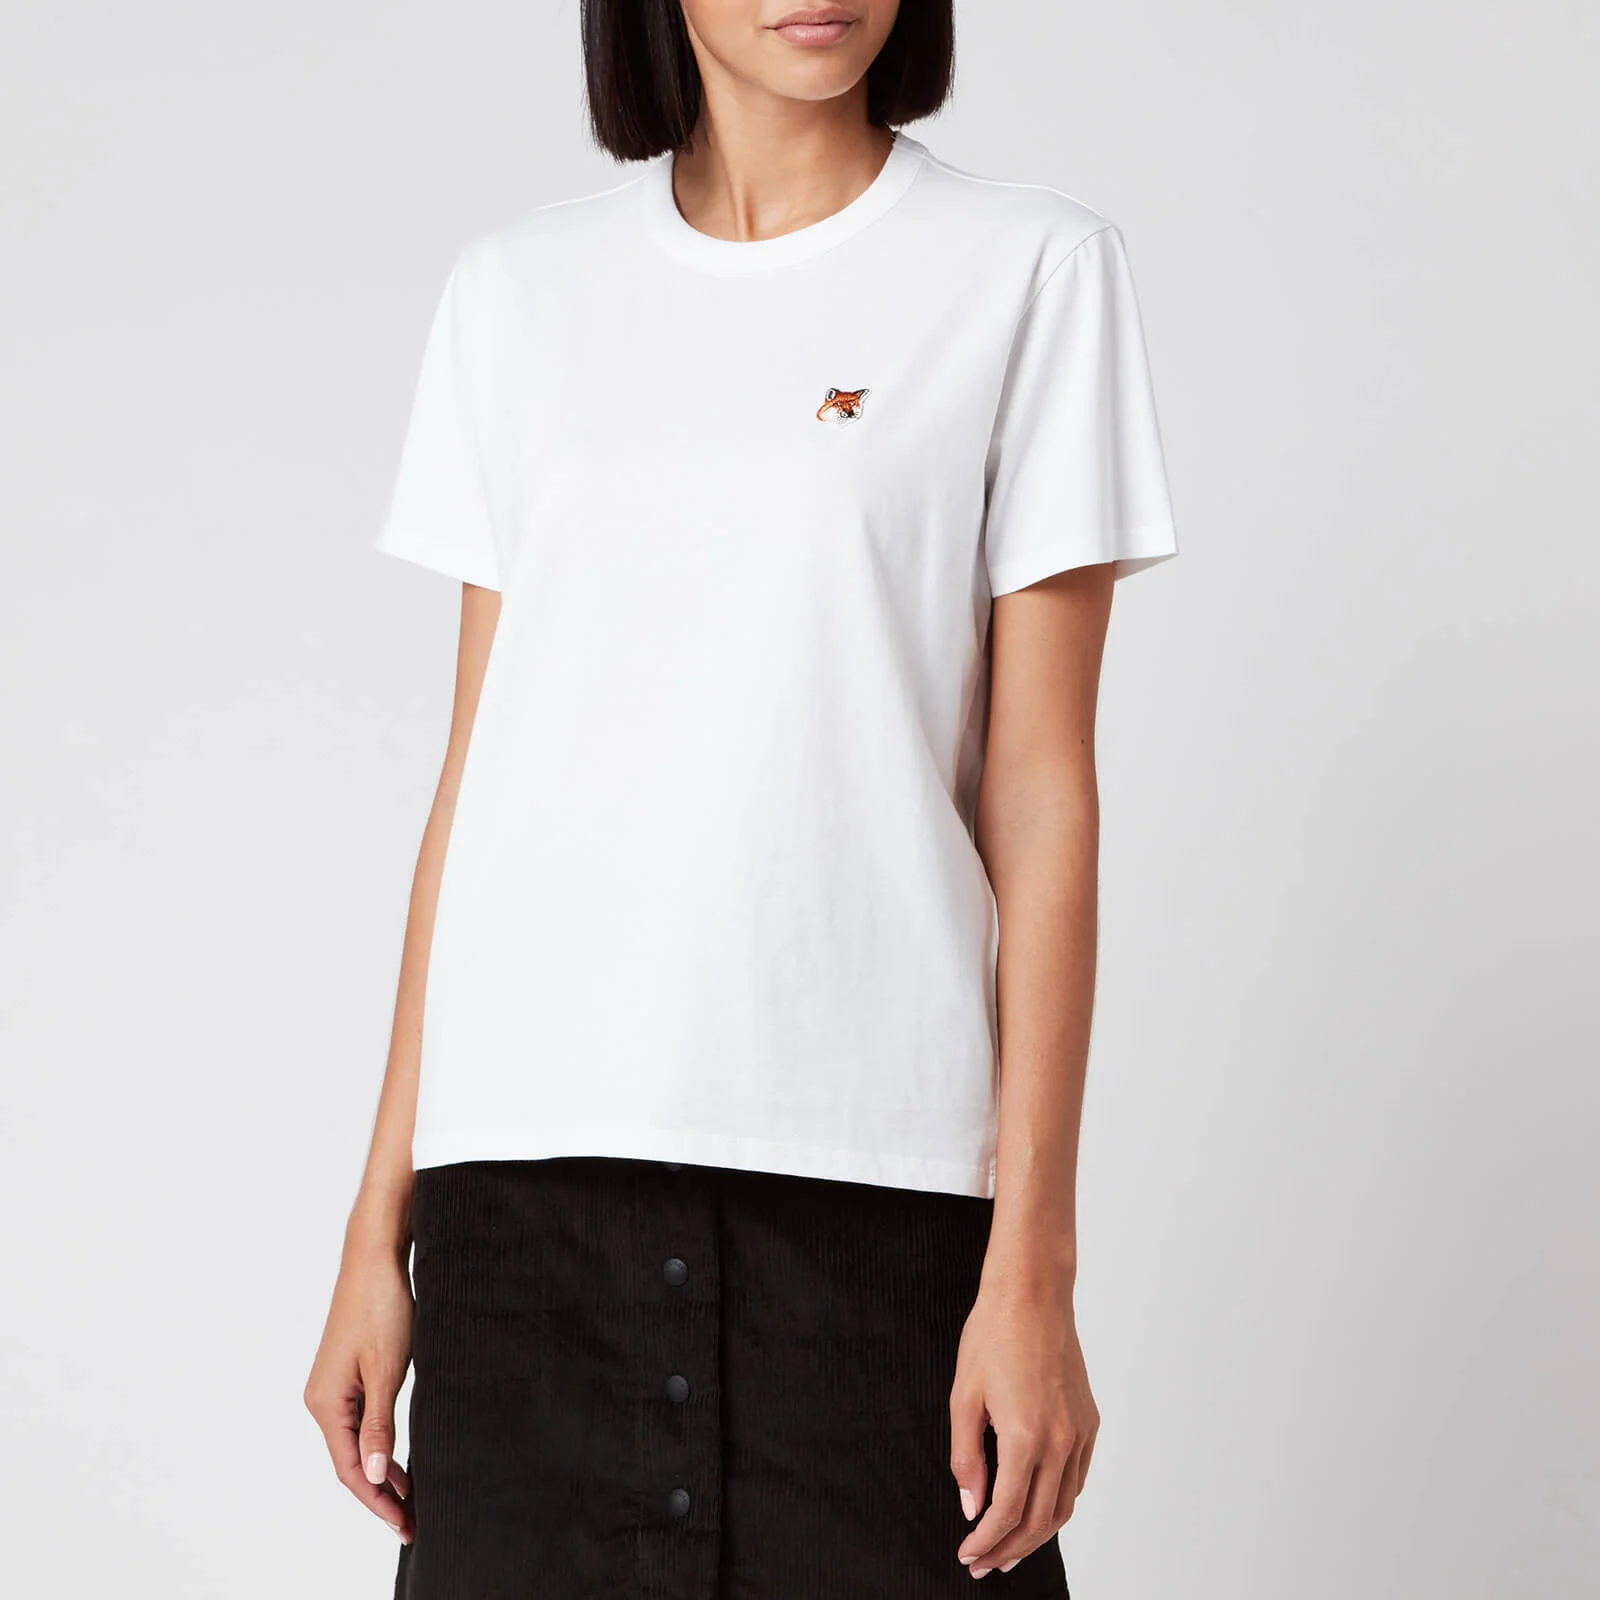 Maison Kitsuné Women's T-Shirt Fox Head Patch - White Image 1